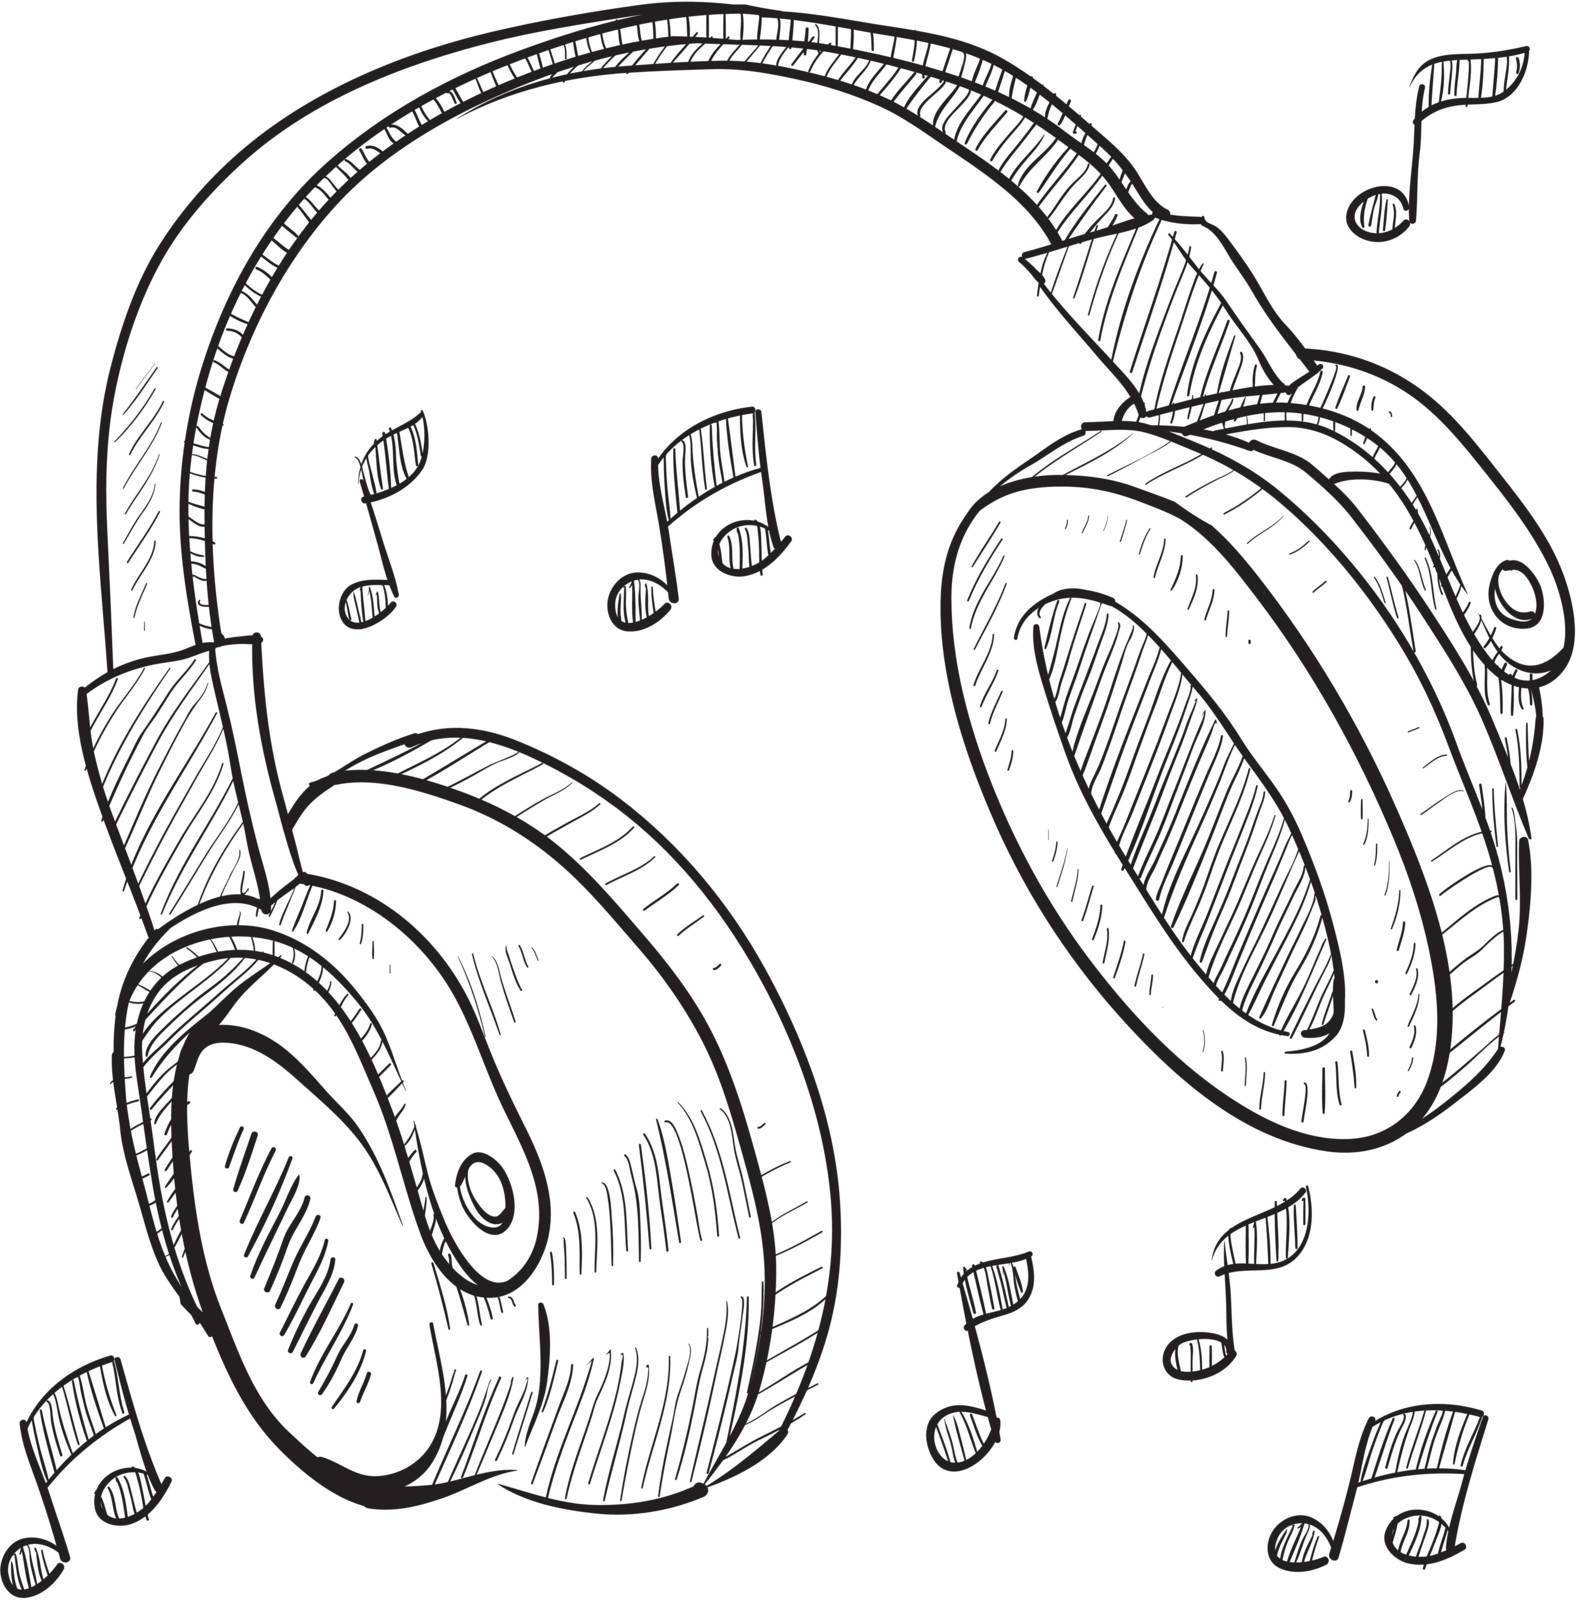 Audio headphones sketch by lhfgraphics